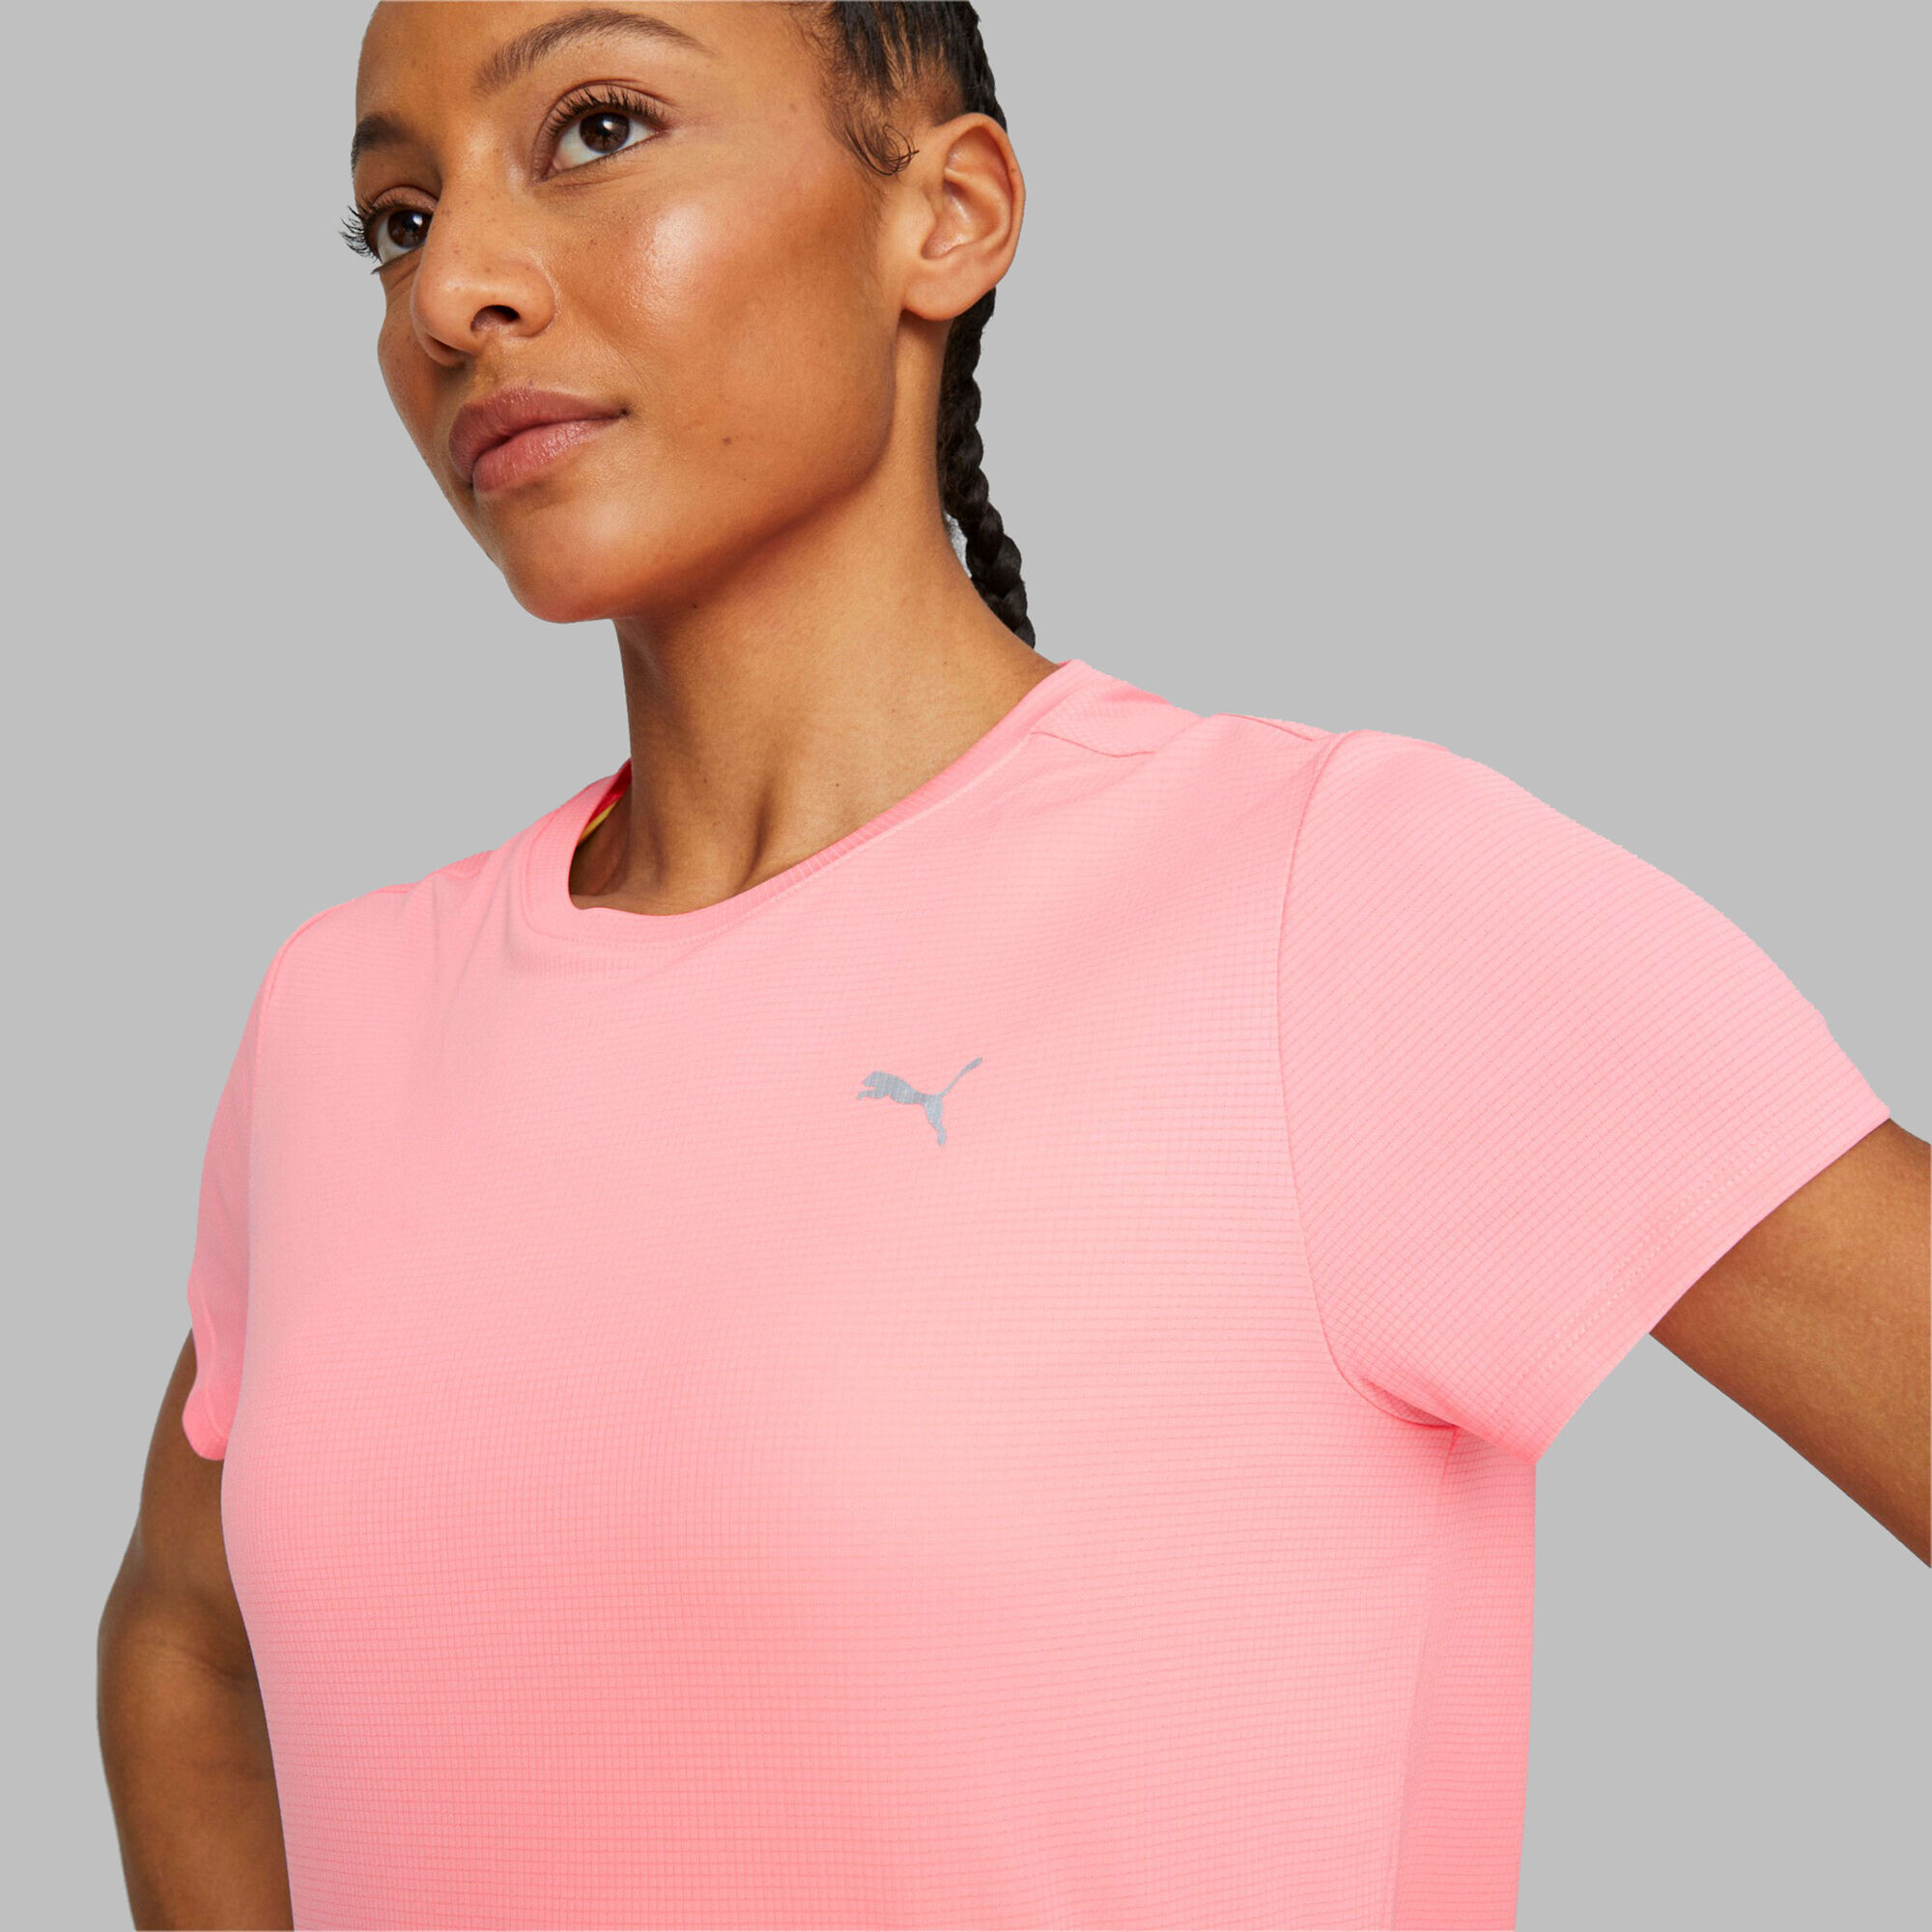 Pink Point Favorite Women Run COM Shirts online Running Running Buy Puma |